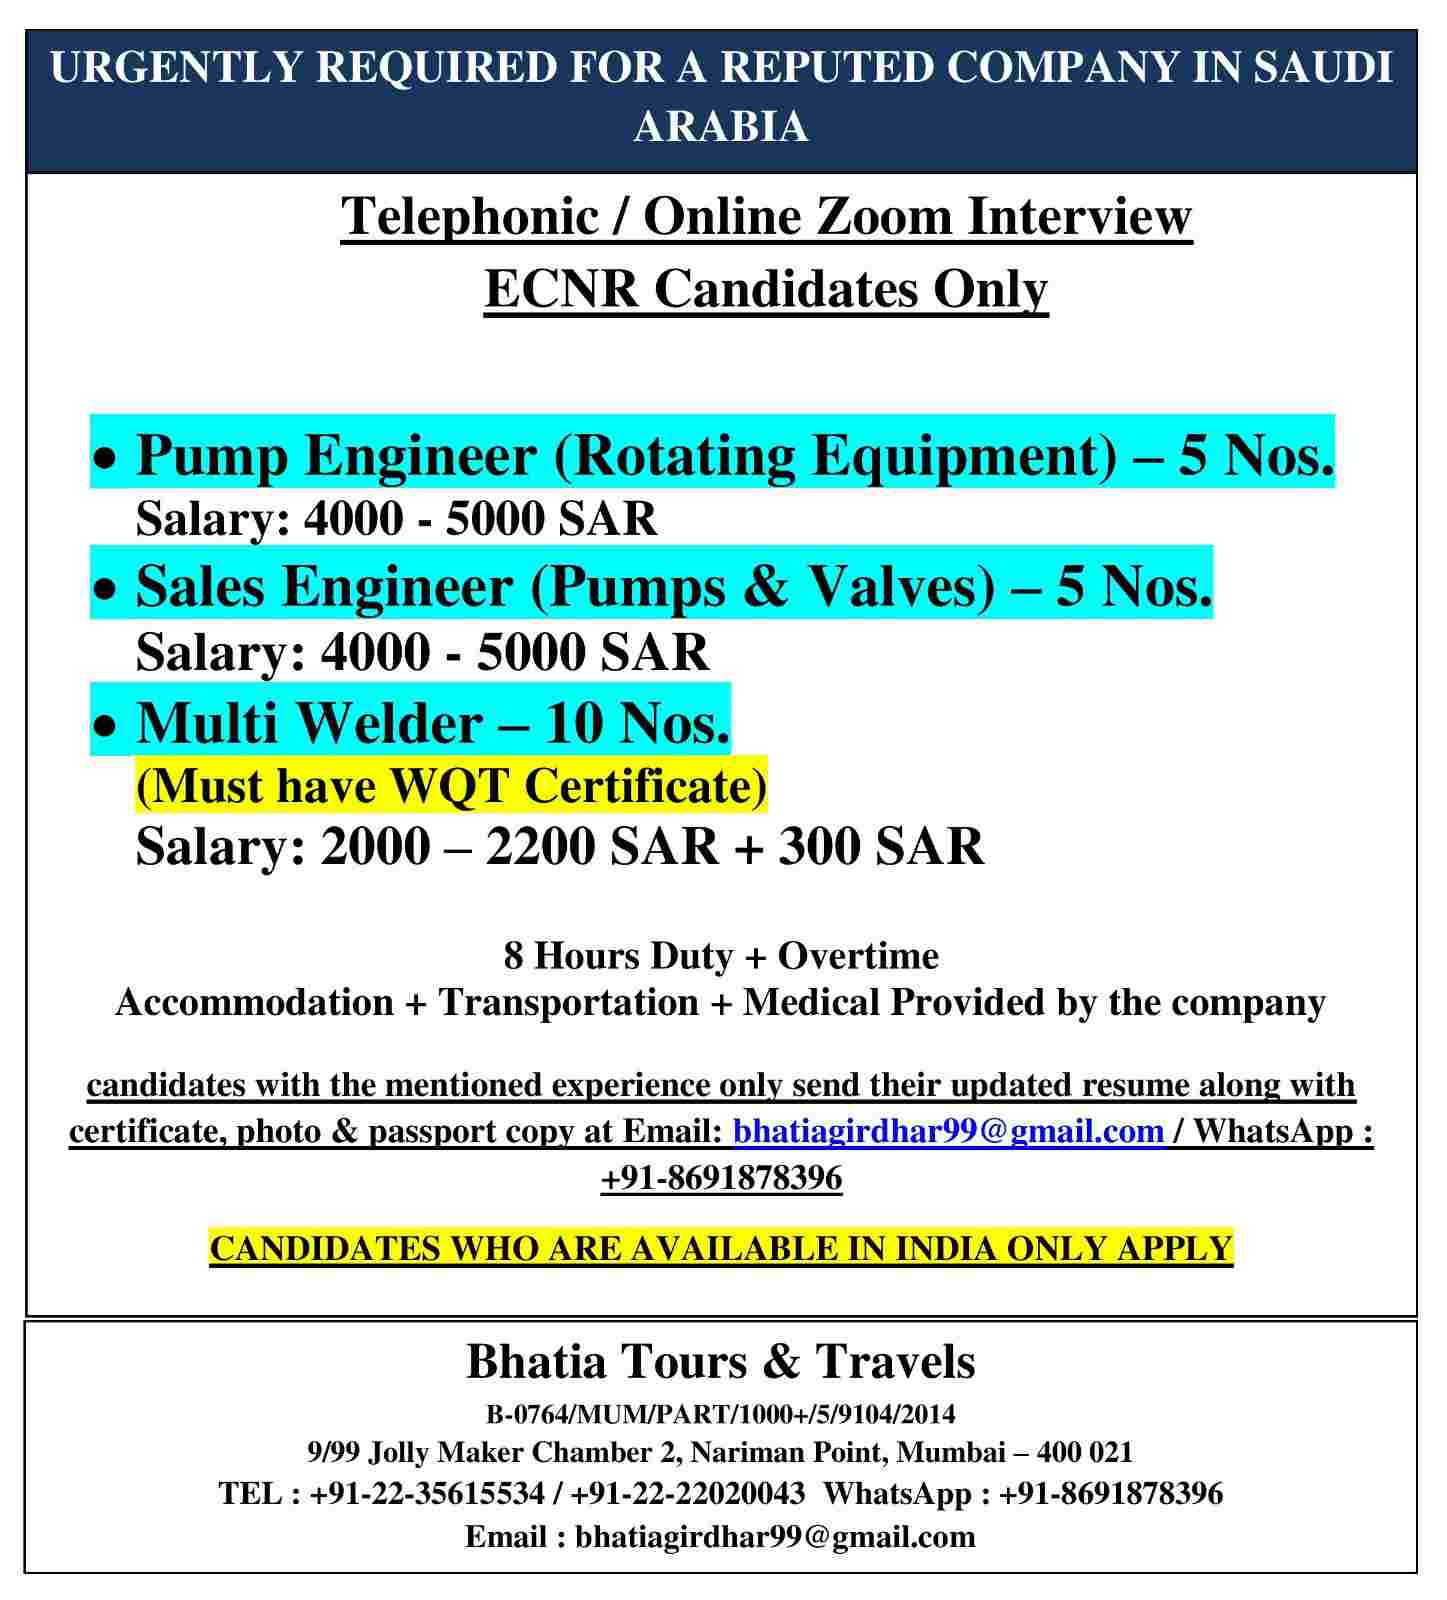 Saudi Arabia / India - Alfanar - Many Job Vacancies - Interview - SaudiGulf  Jobs